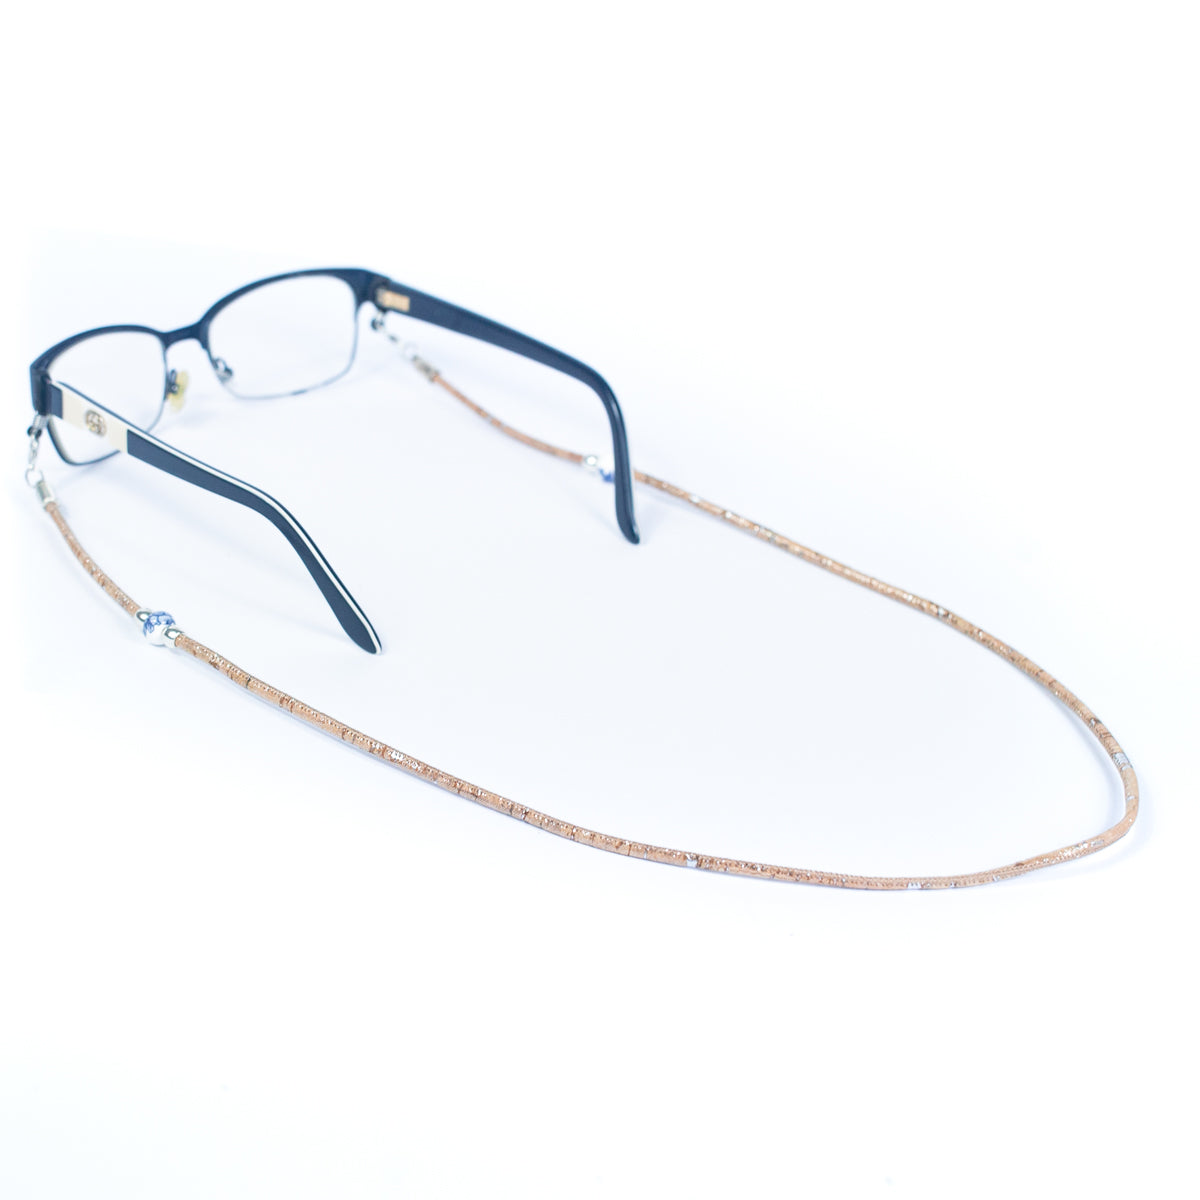 2MM Handmade Round Cork Thread Eyeglass Holder Glasses | THE CORK COLLECTION